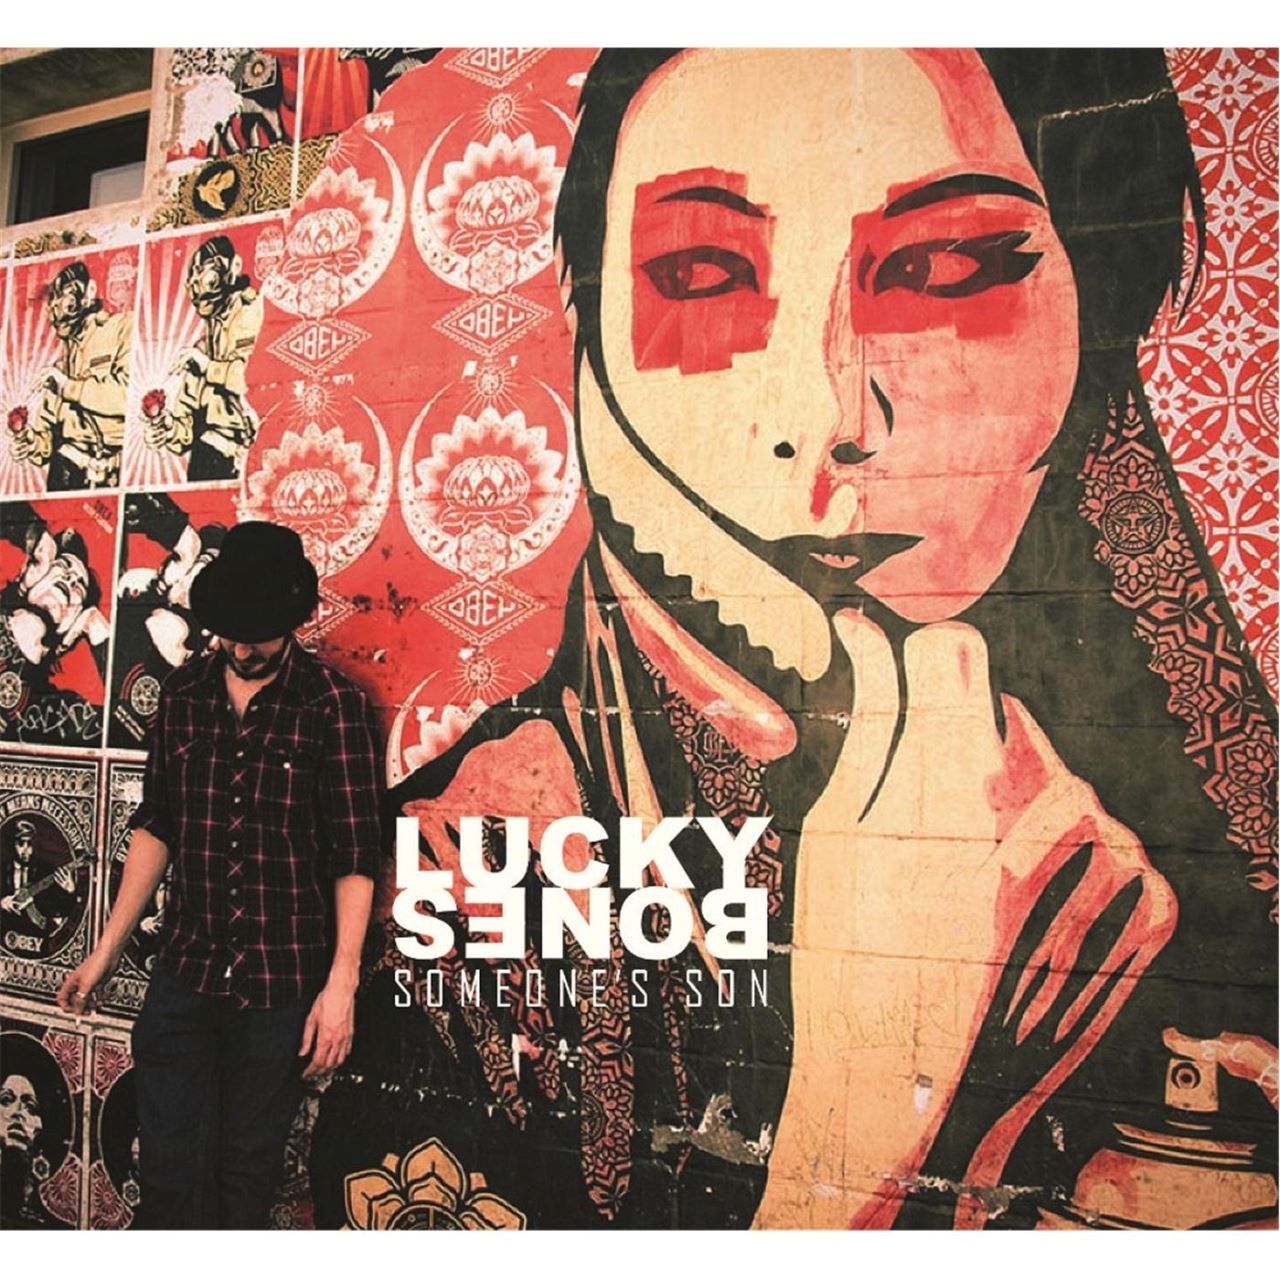 Lucky Bones - Someone’s Son cover album